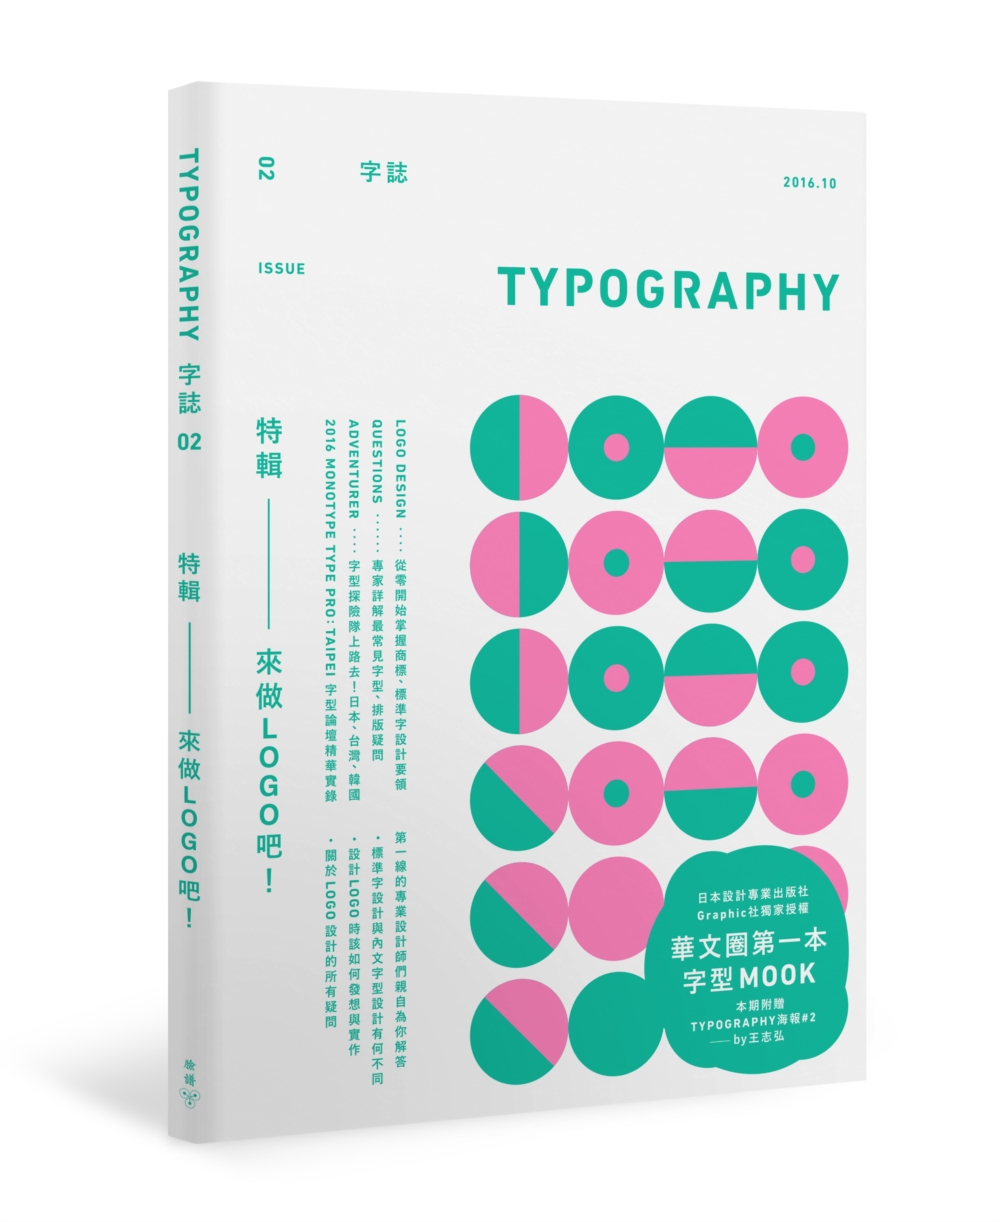 Typography 字誌：Issue 02 來做LOGO吧...